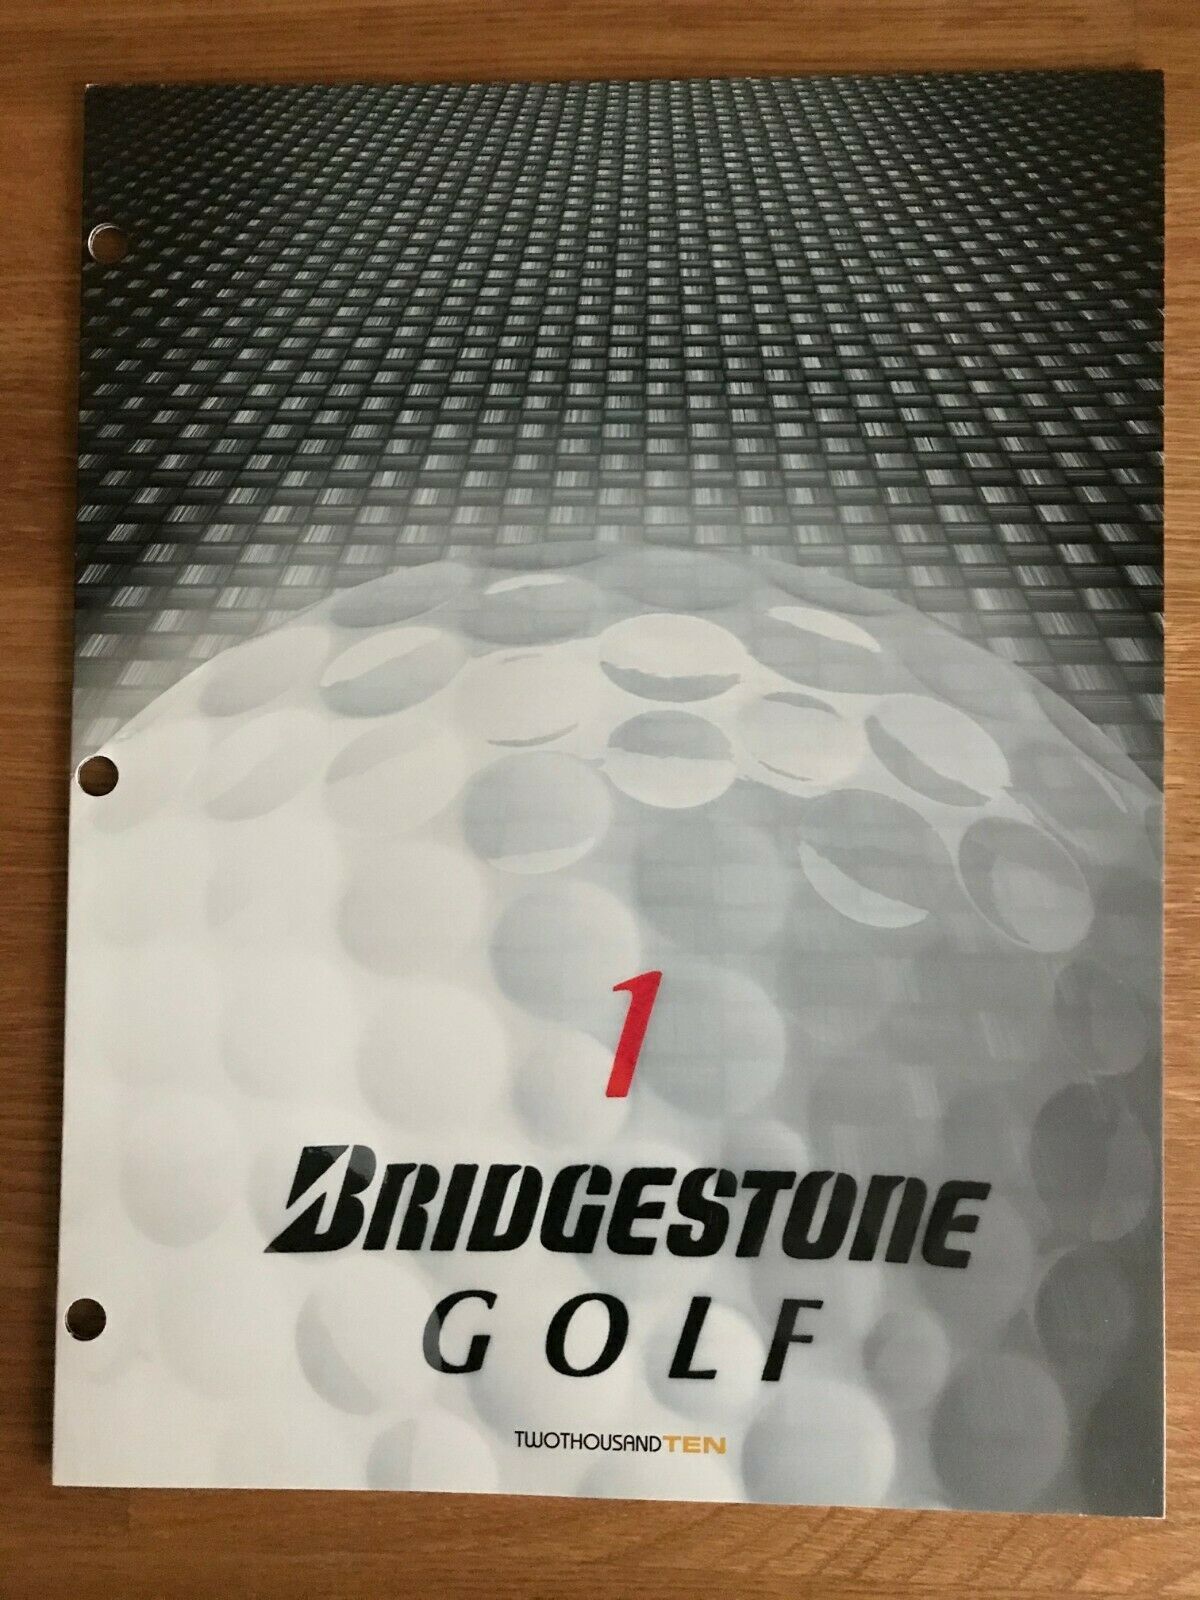 Bridgestone Golf Equipment Catalogue from 2010. - $5.23